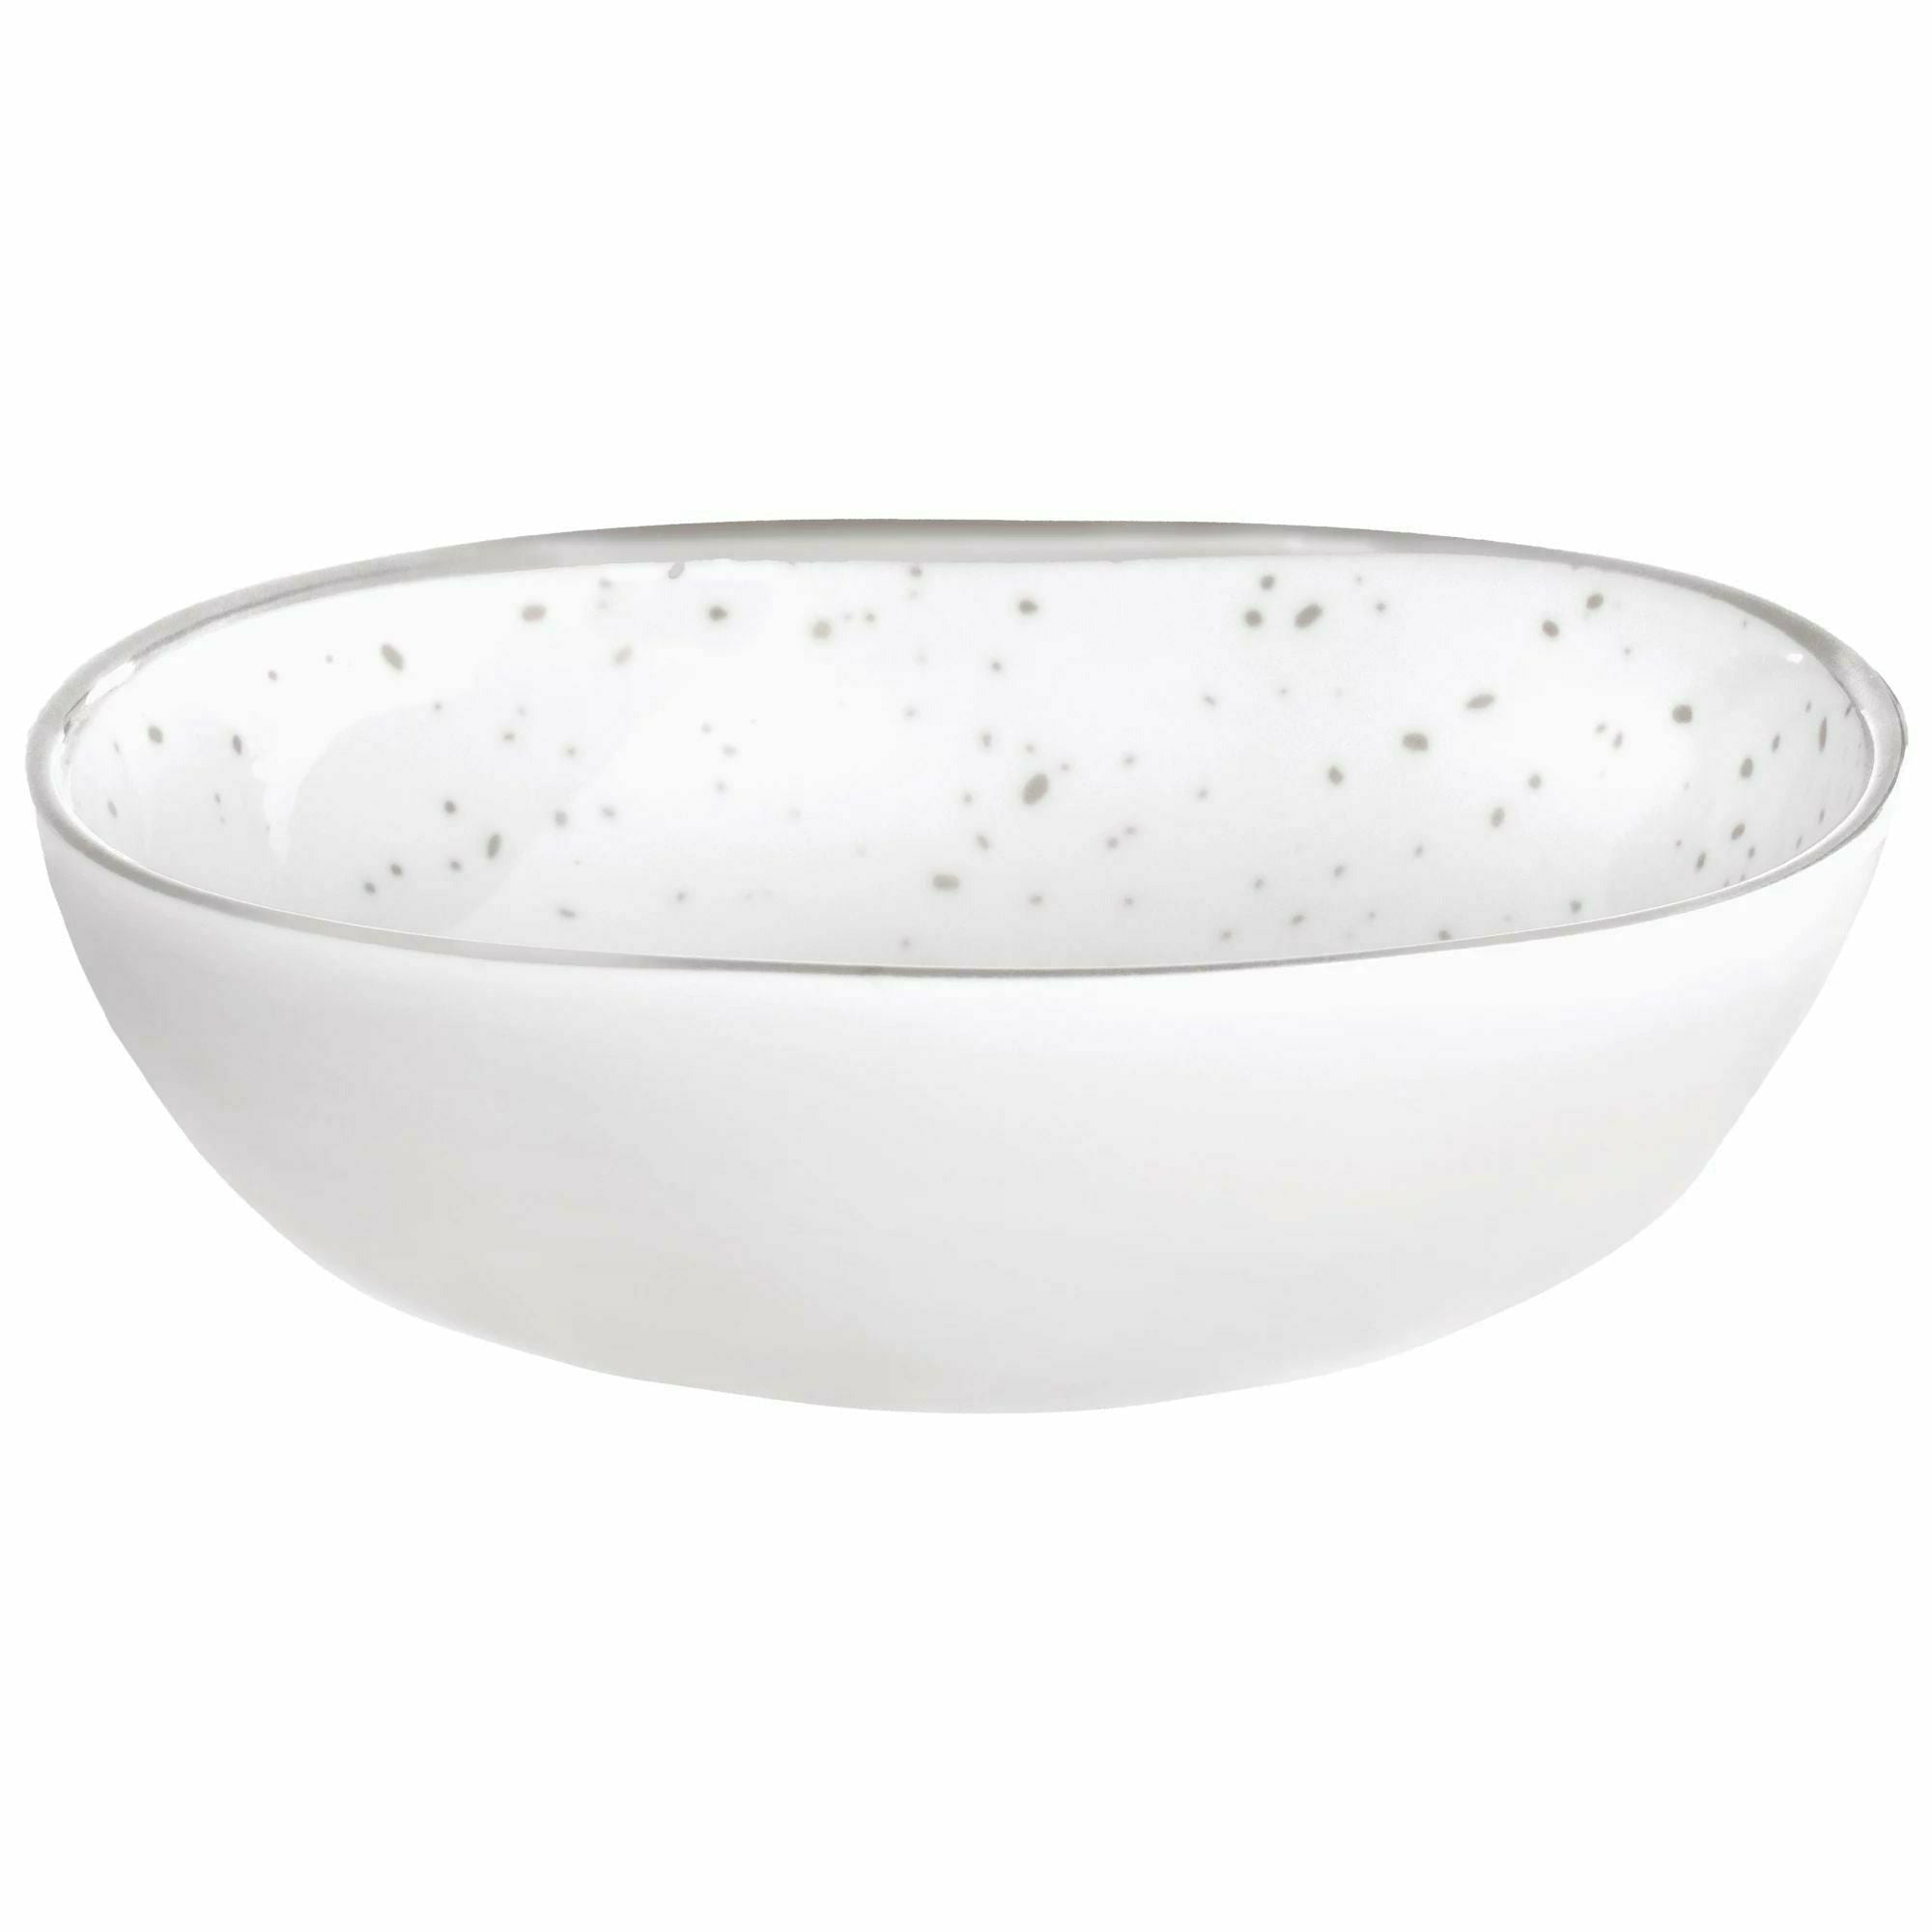 Amscan BASIC Melamine Plastic Bowl - Silver